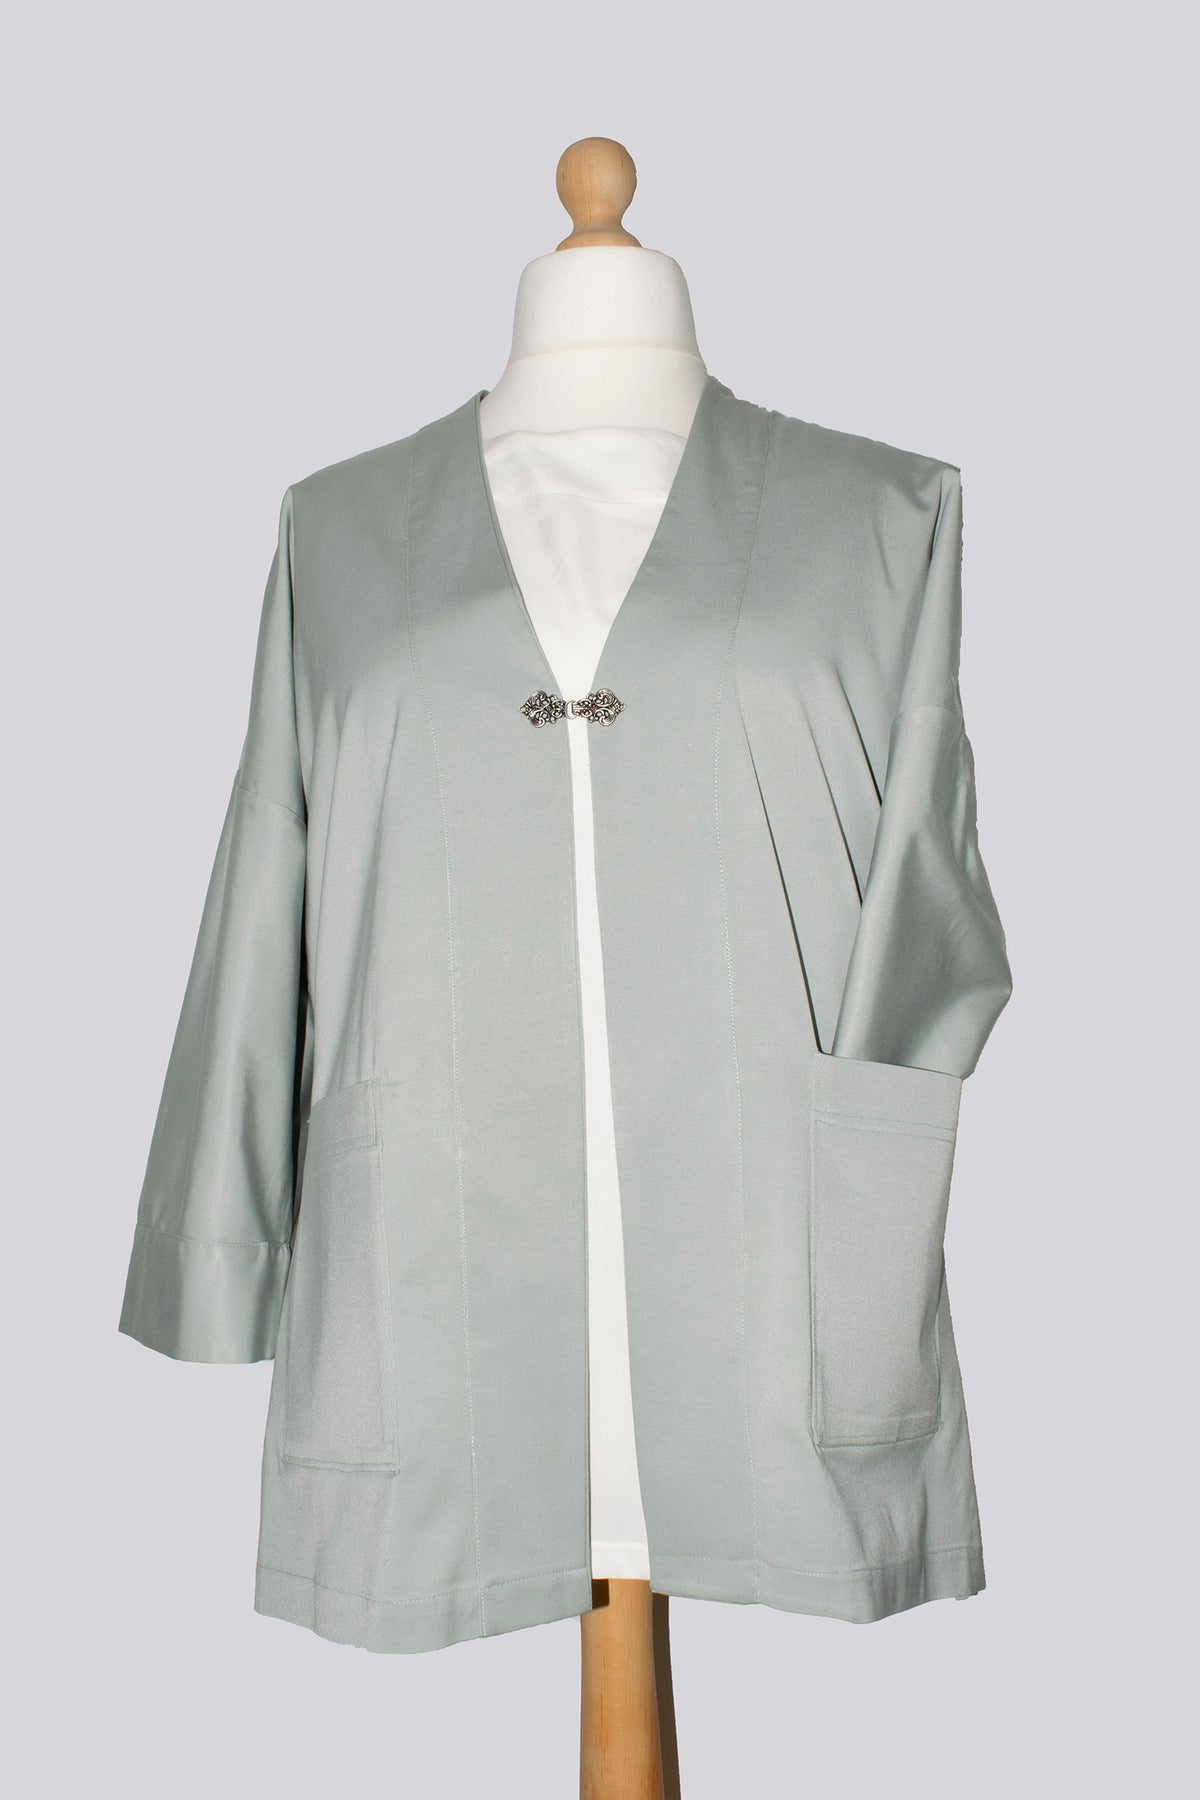 Light Aqua Grey Summer Jacket